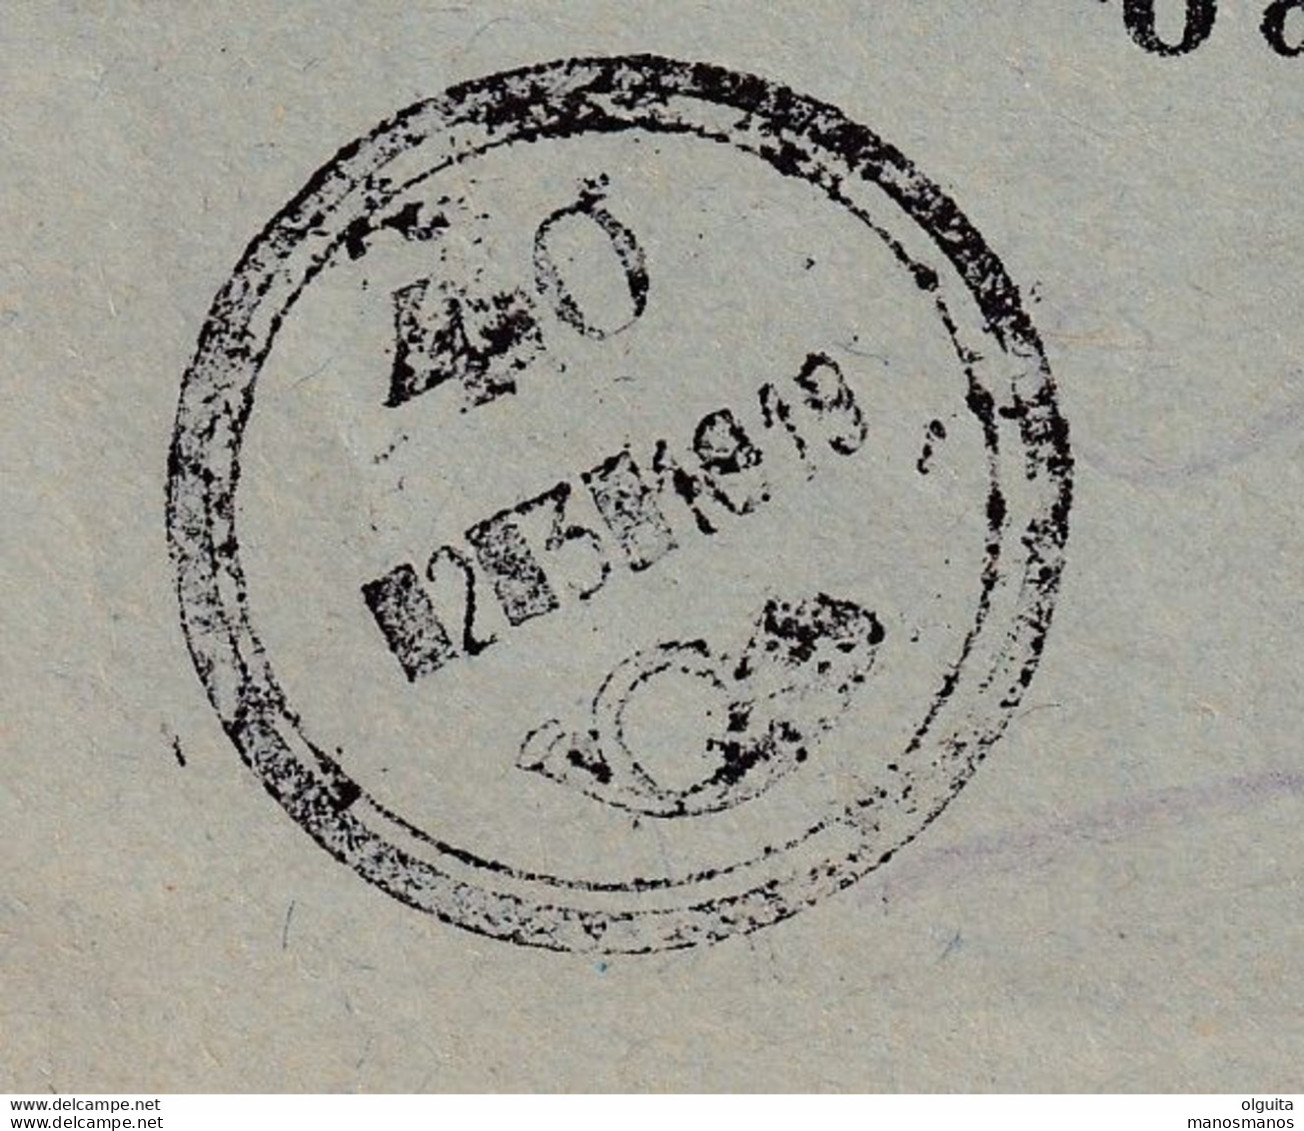 DDCC 250 - CRETE RURAL Posthorn Cancels - Nr 40 From ARXANAI On 1909 Judicial Document - Kreta